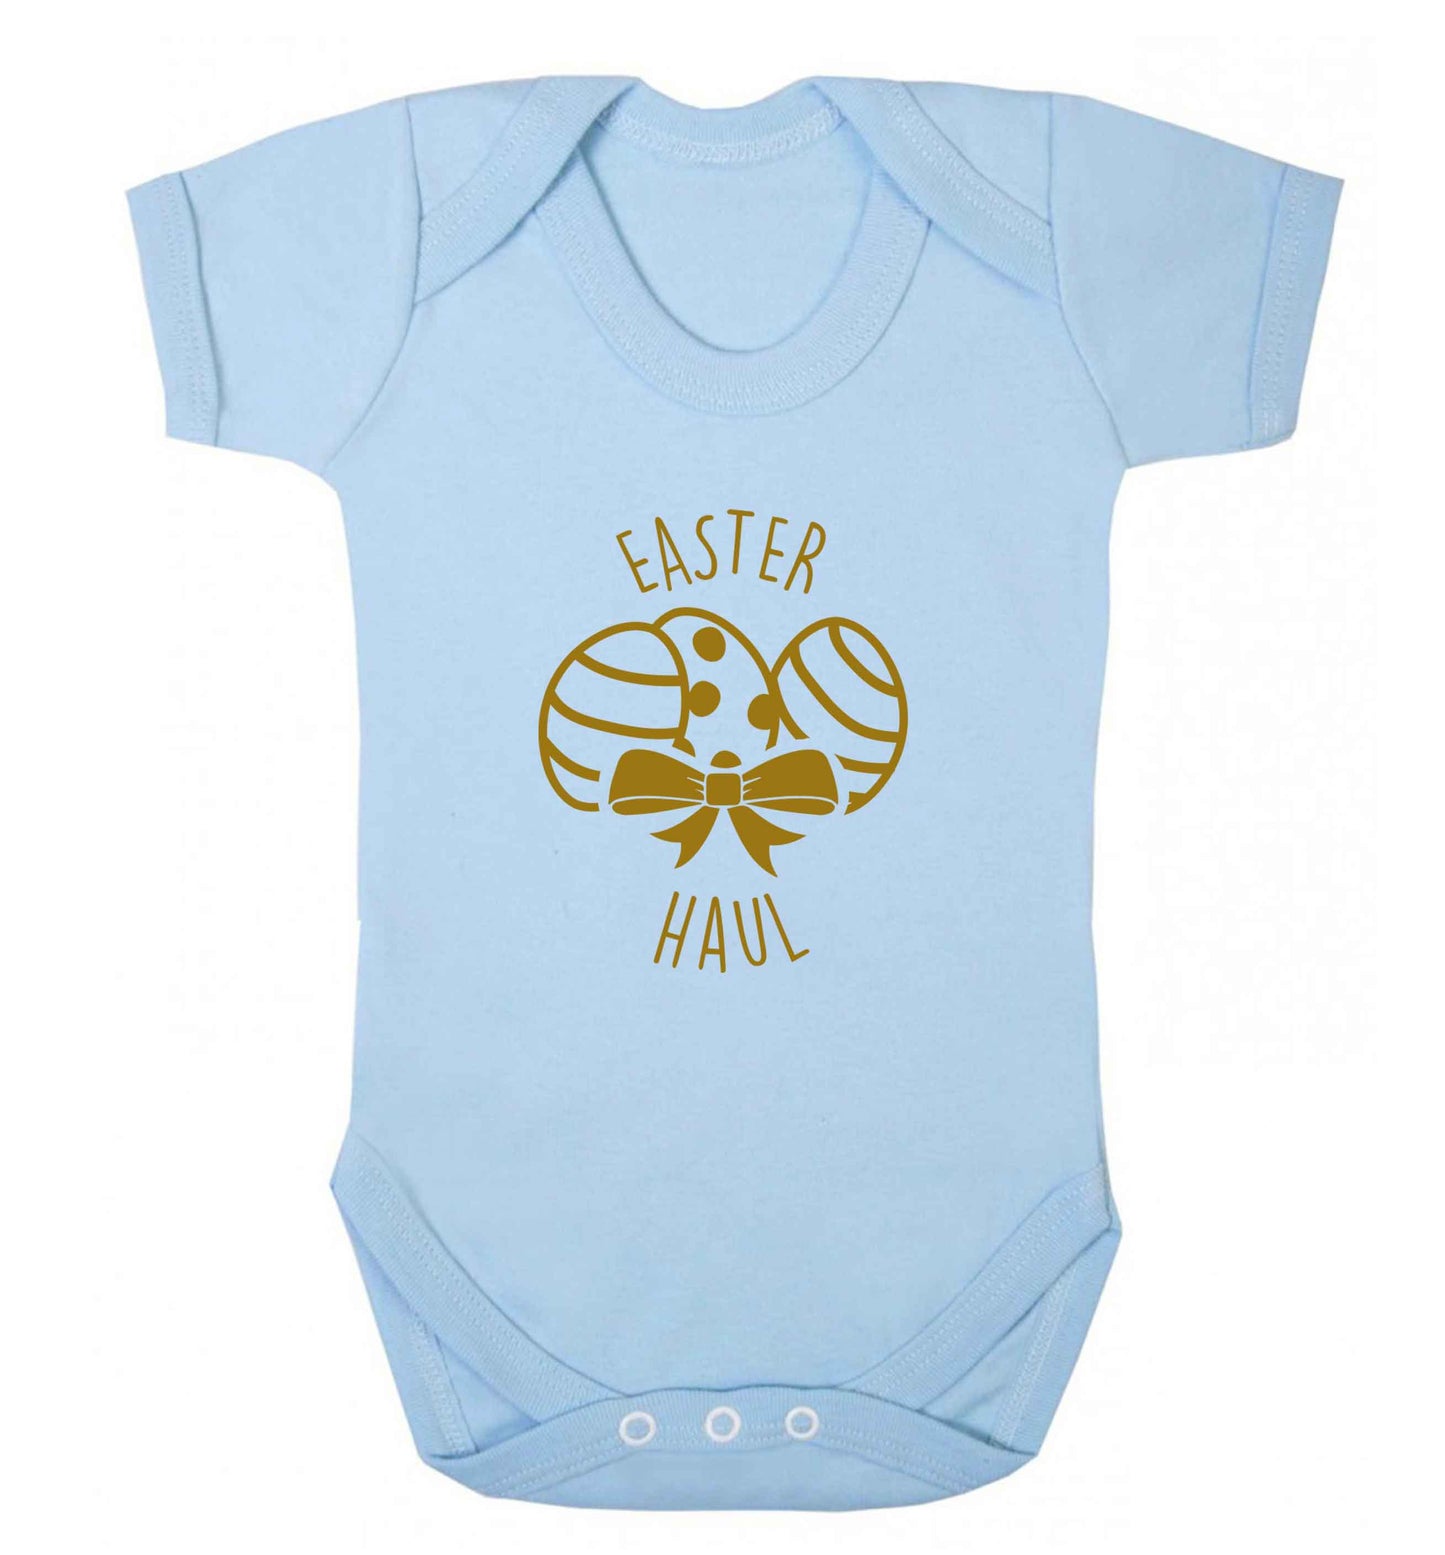 Easter haul baby vest pale blue 18-24 months